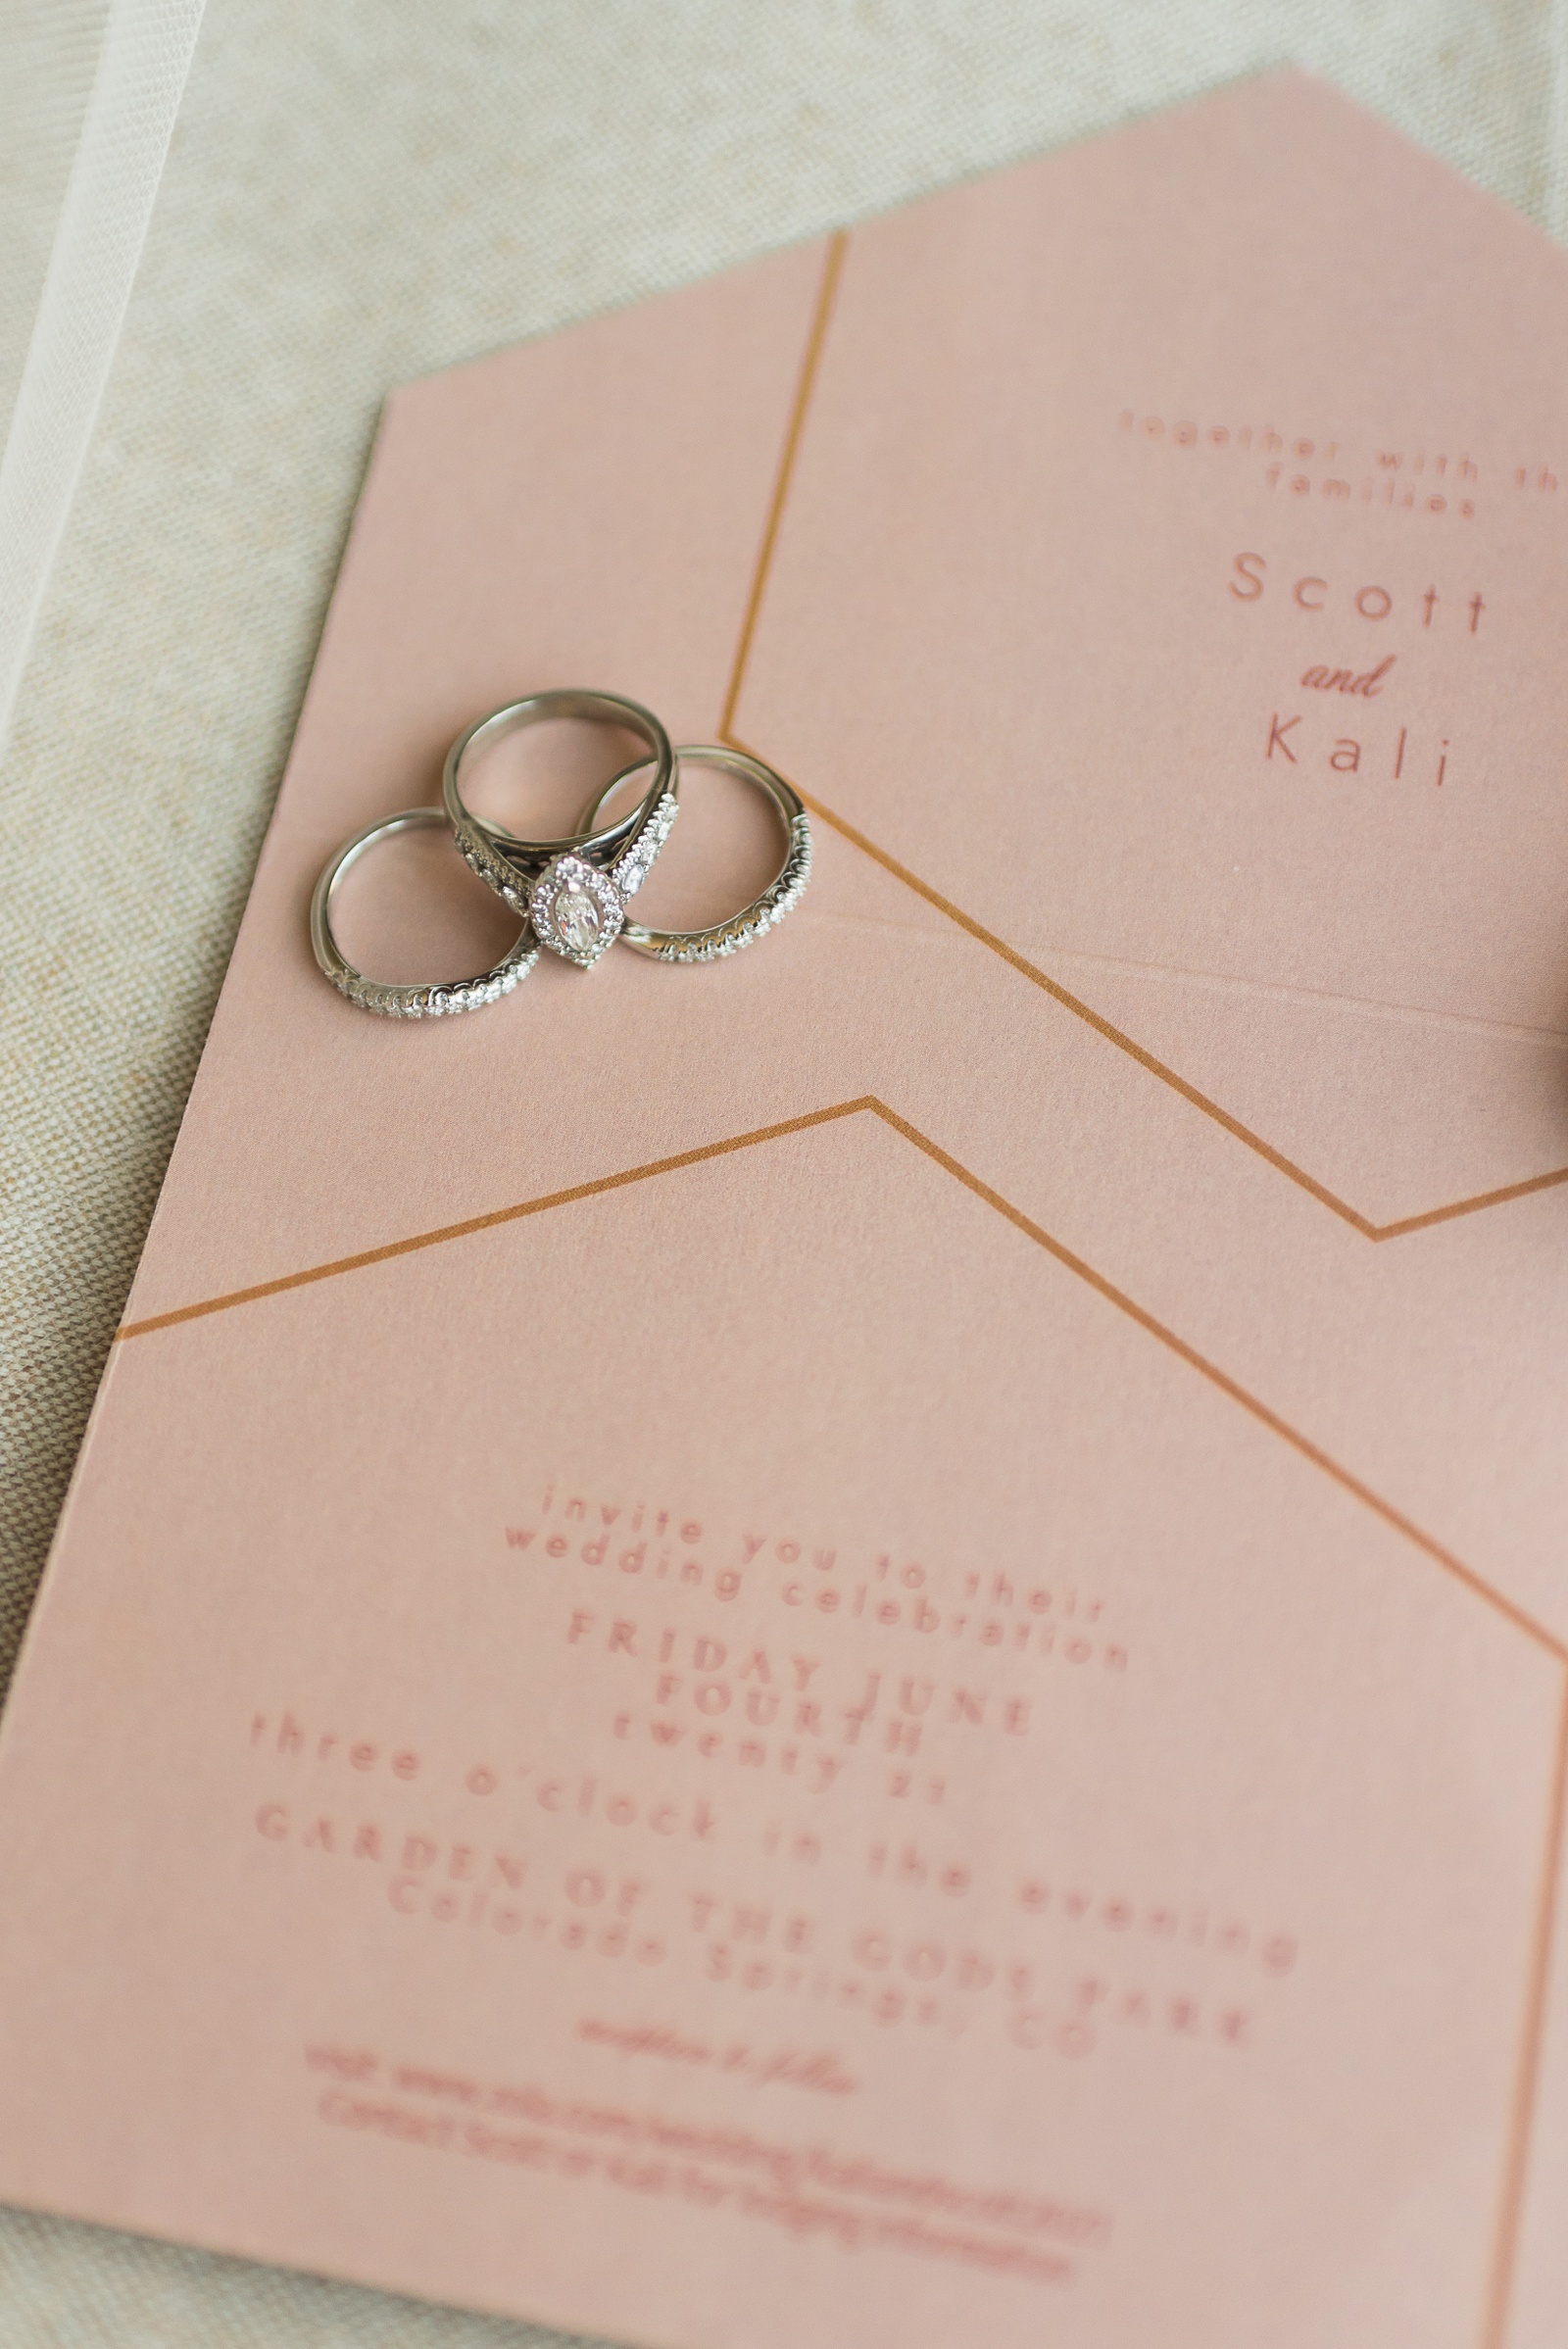 Wedding rings on invitation.